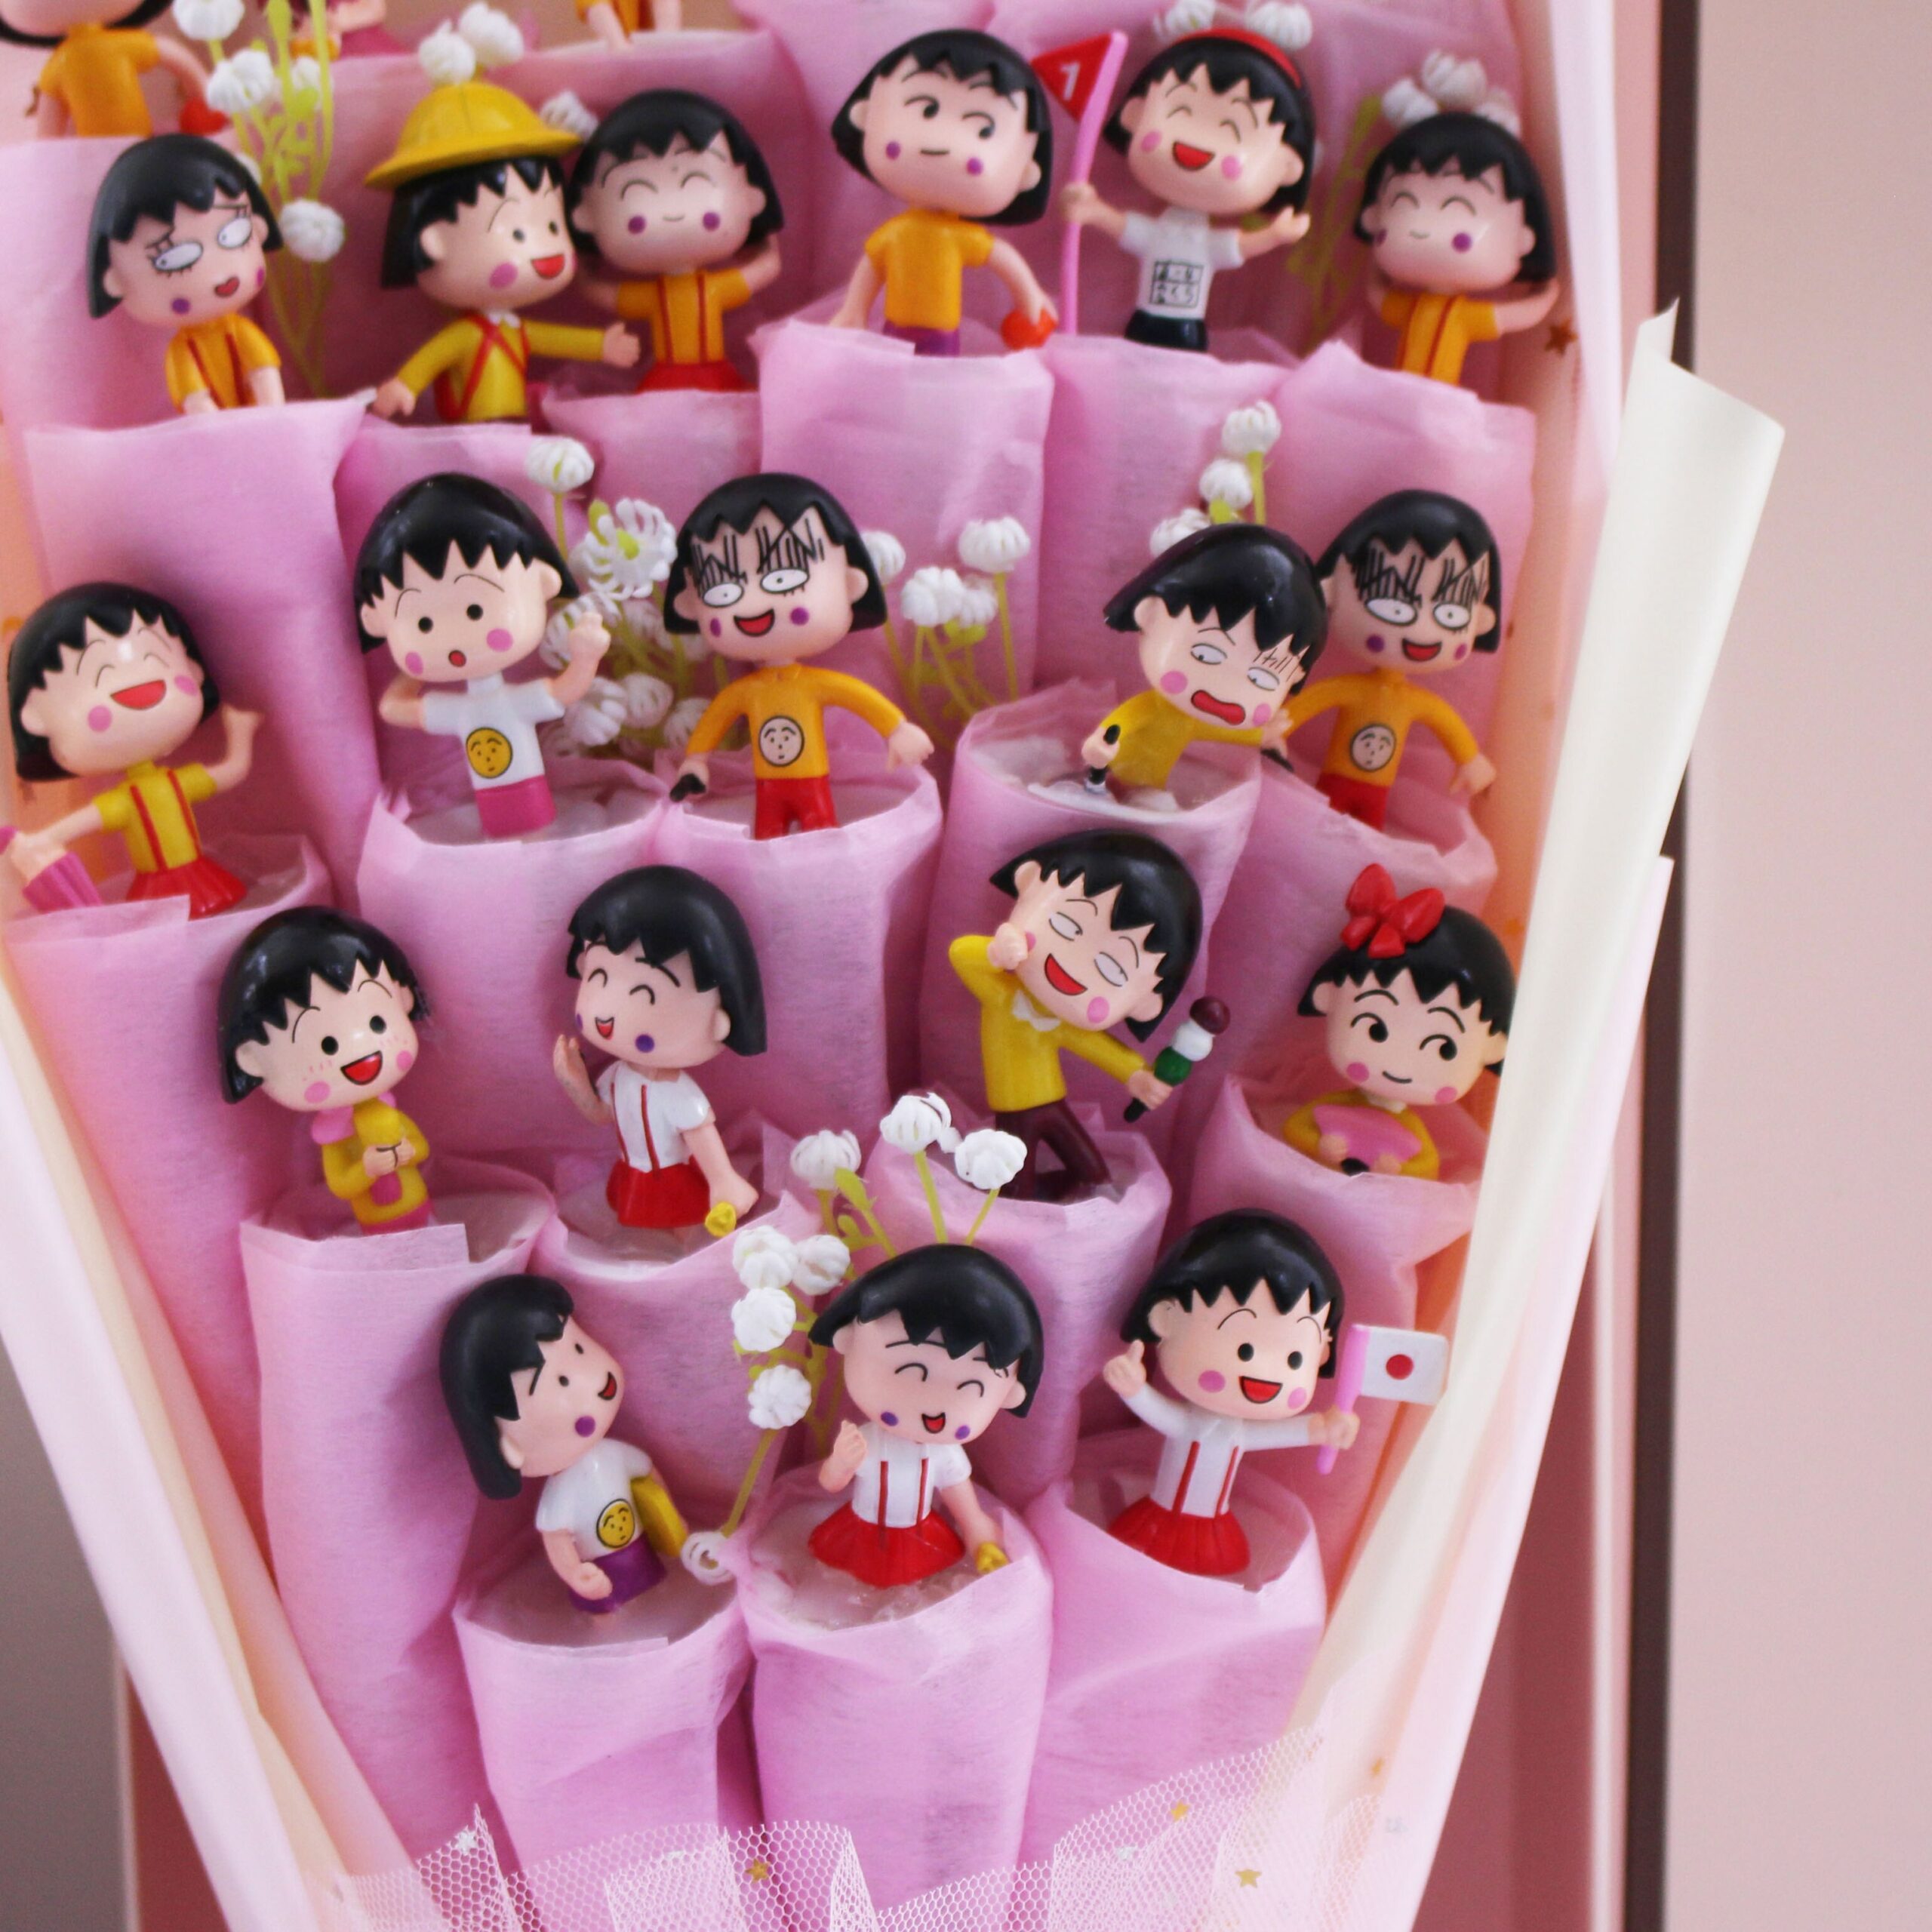 New Handmade Promotion Chibi Maruko cartoon miniature figurines Kids Toy Flower Bouquet Creative birthday gifts Christmas gift Uncategorized